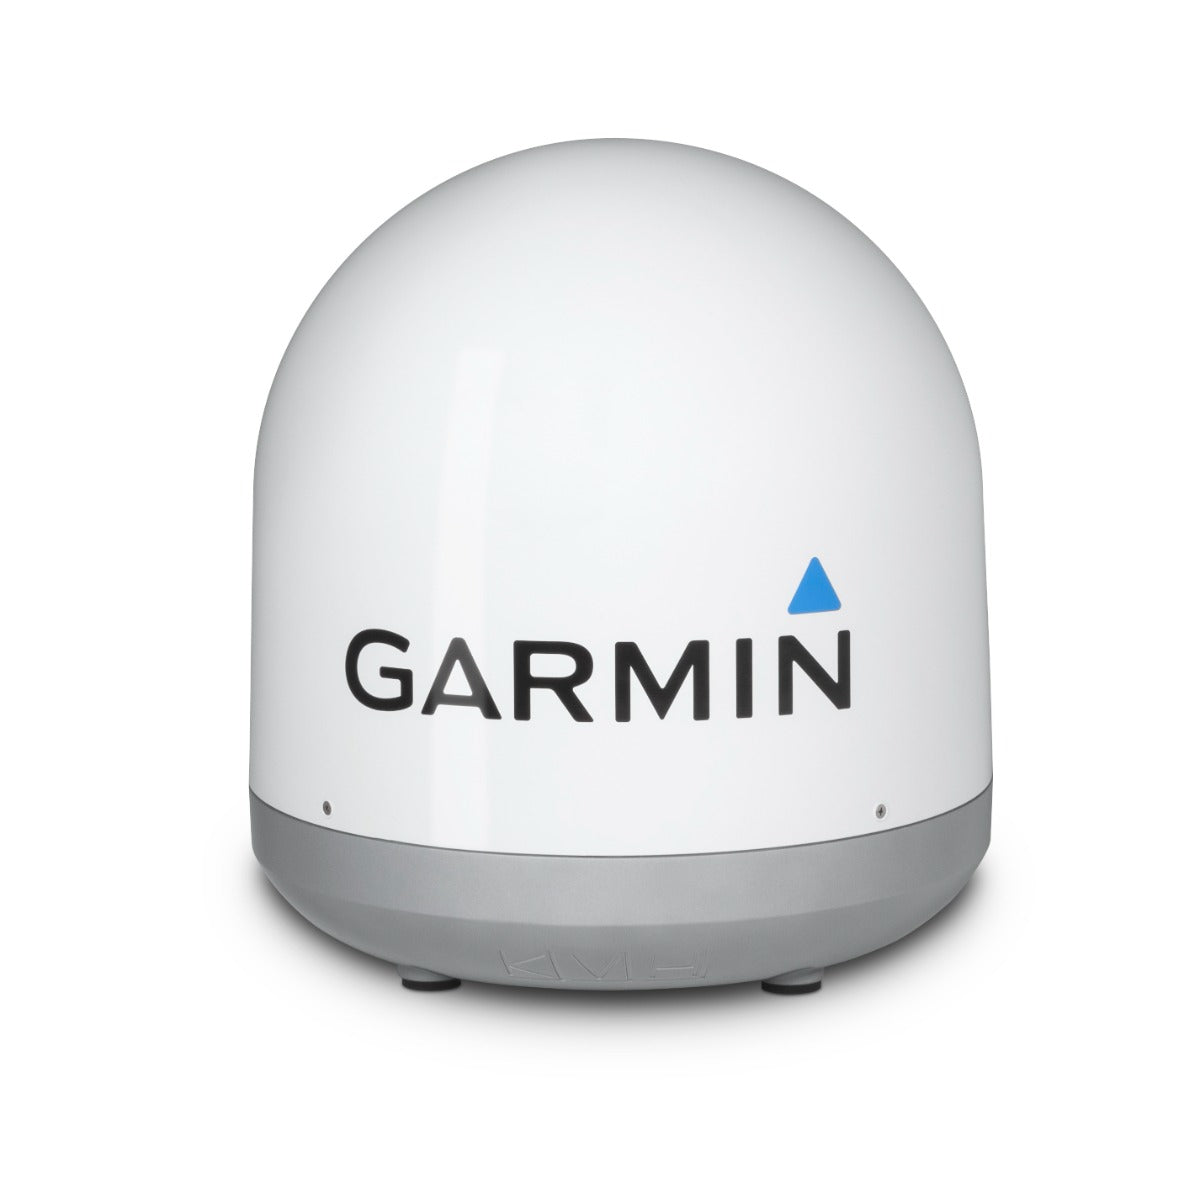 Garmin GTV5 Satellite TV Dome (powered by KVH) - PROTEUS MARINE STORE